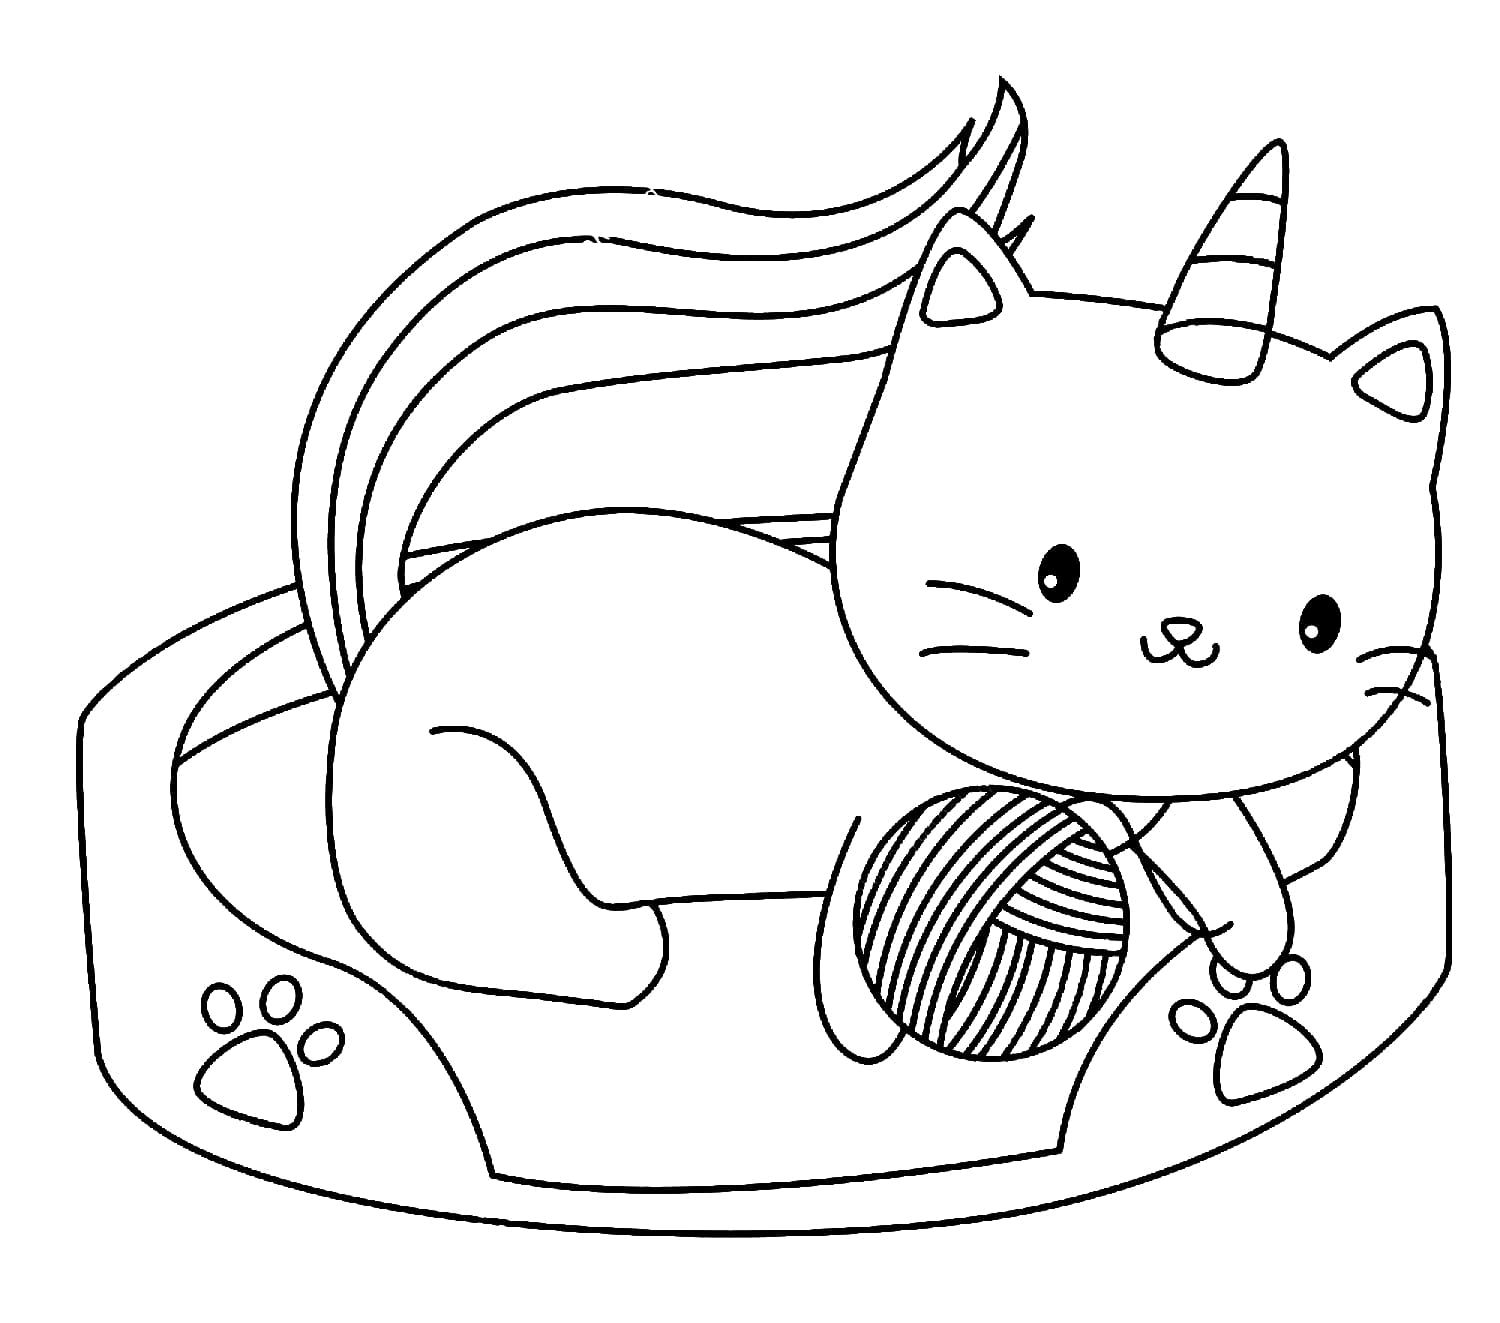 Gato traje unicornio Kawaii para colorir by PoccnnIndustriesPT on DeviantArt